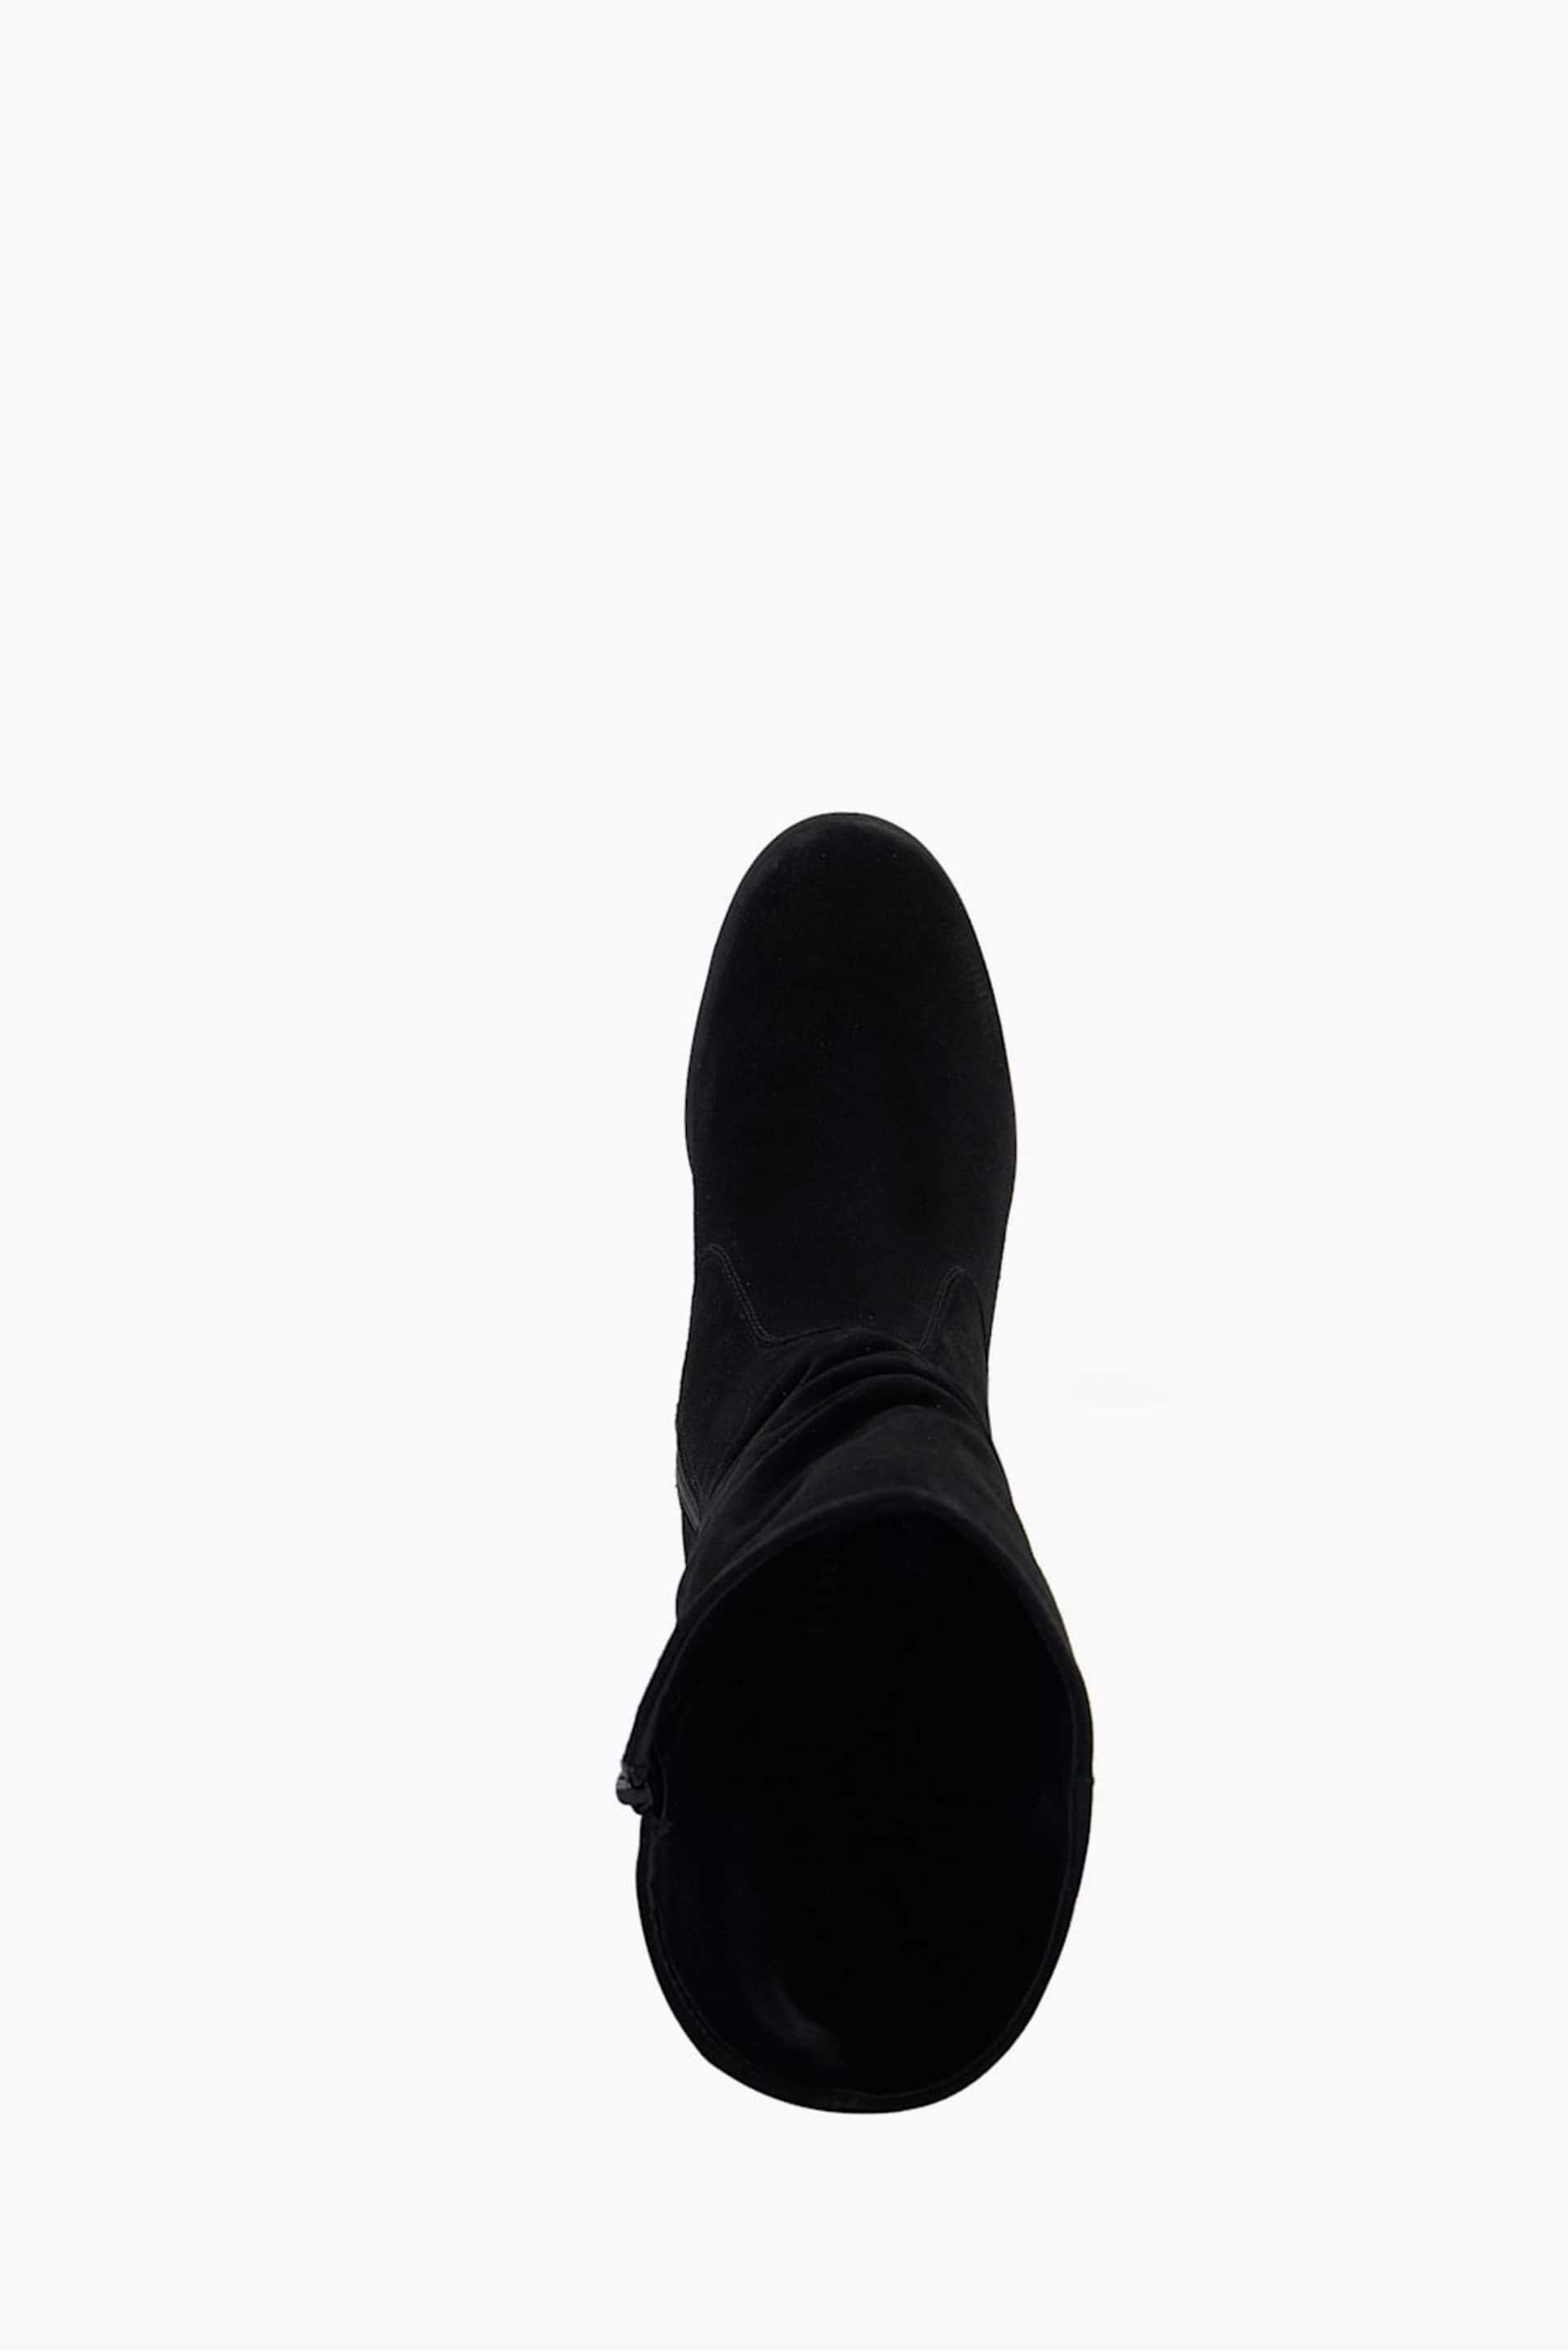 Dune London Black Ruched Tasha Wedge Comfort Boots - Image 5 of 5